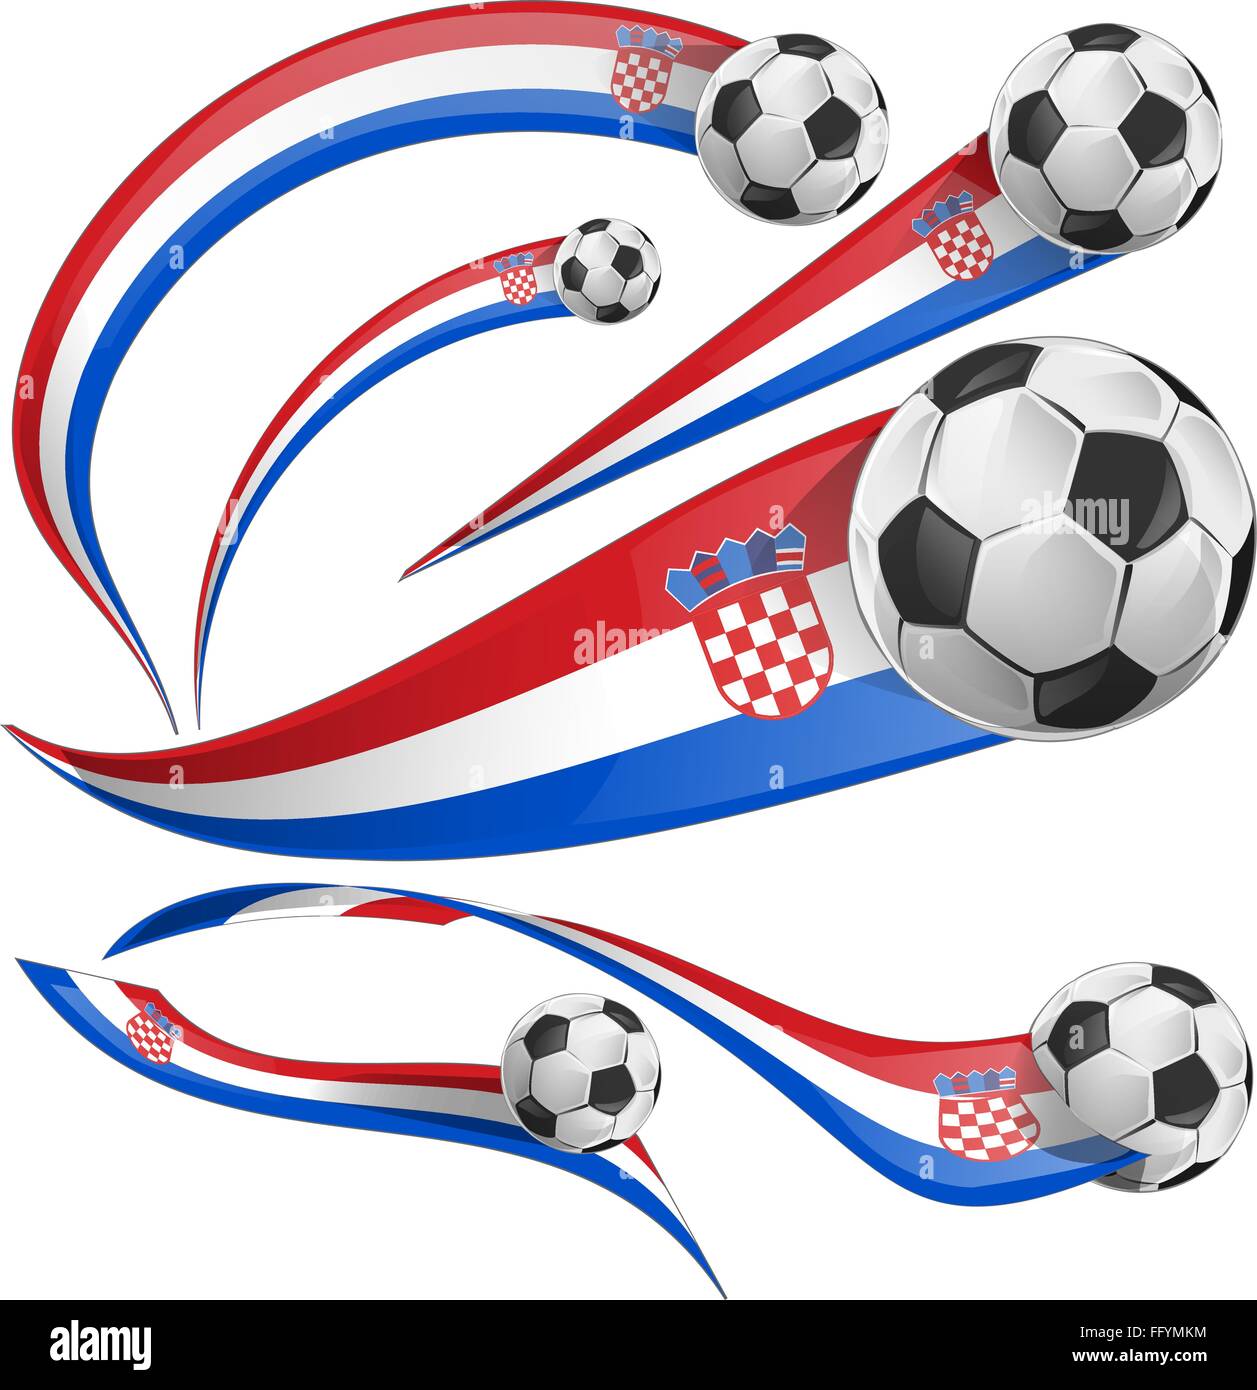 croatia flag set with soccer ball isolated Stock Vector